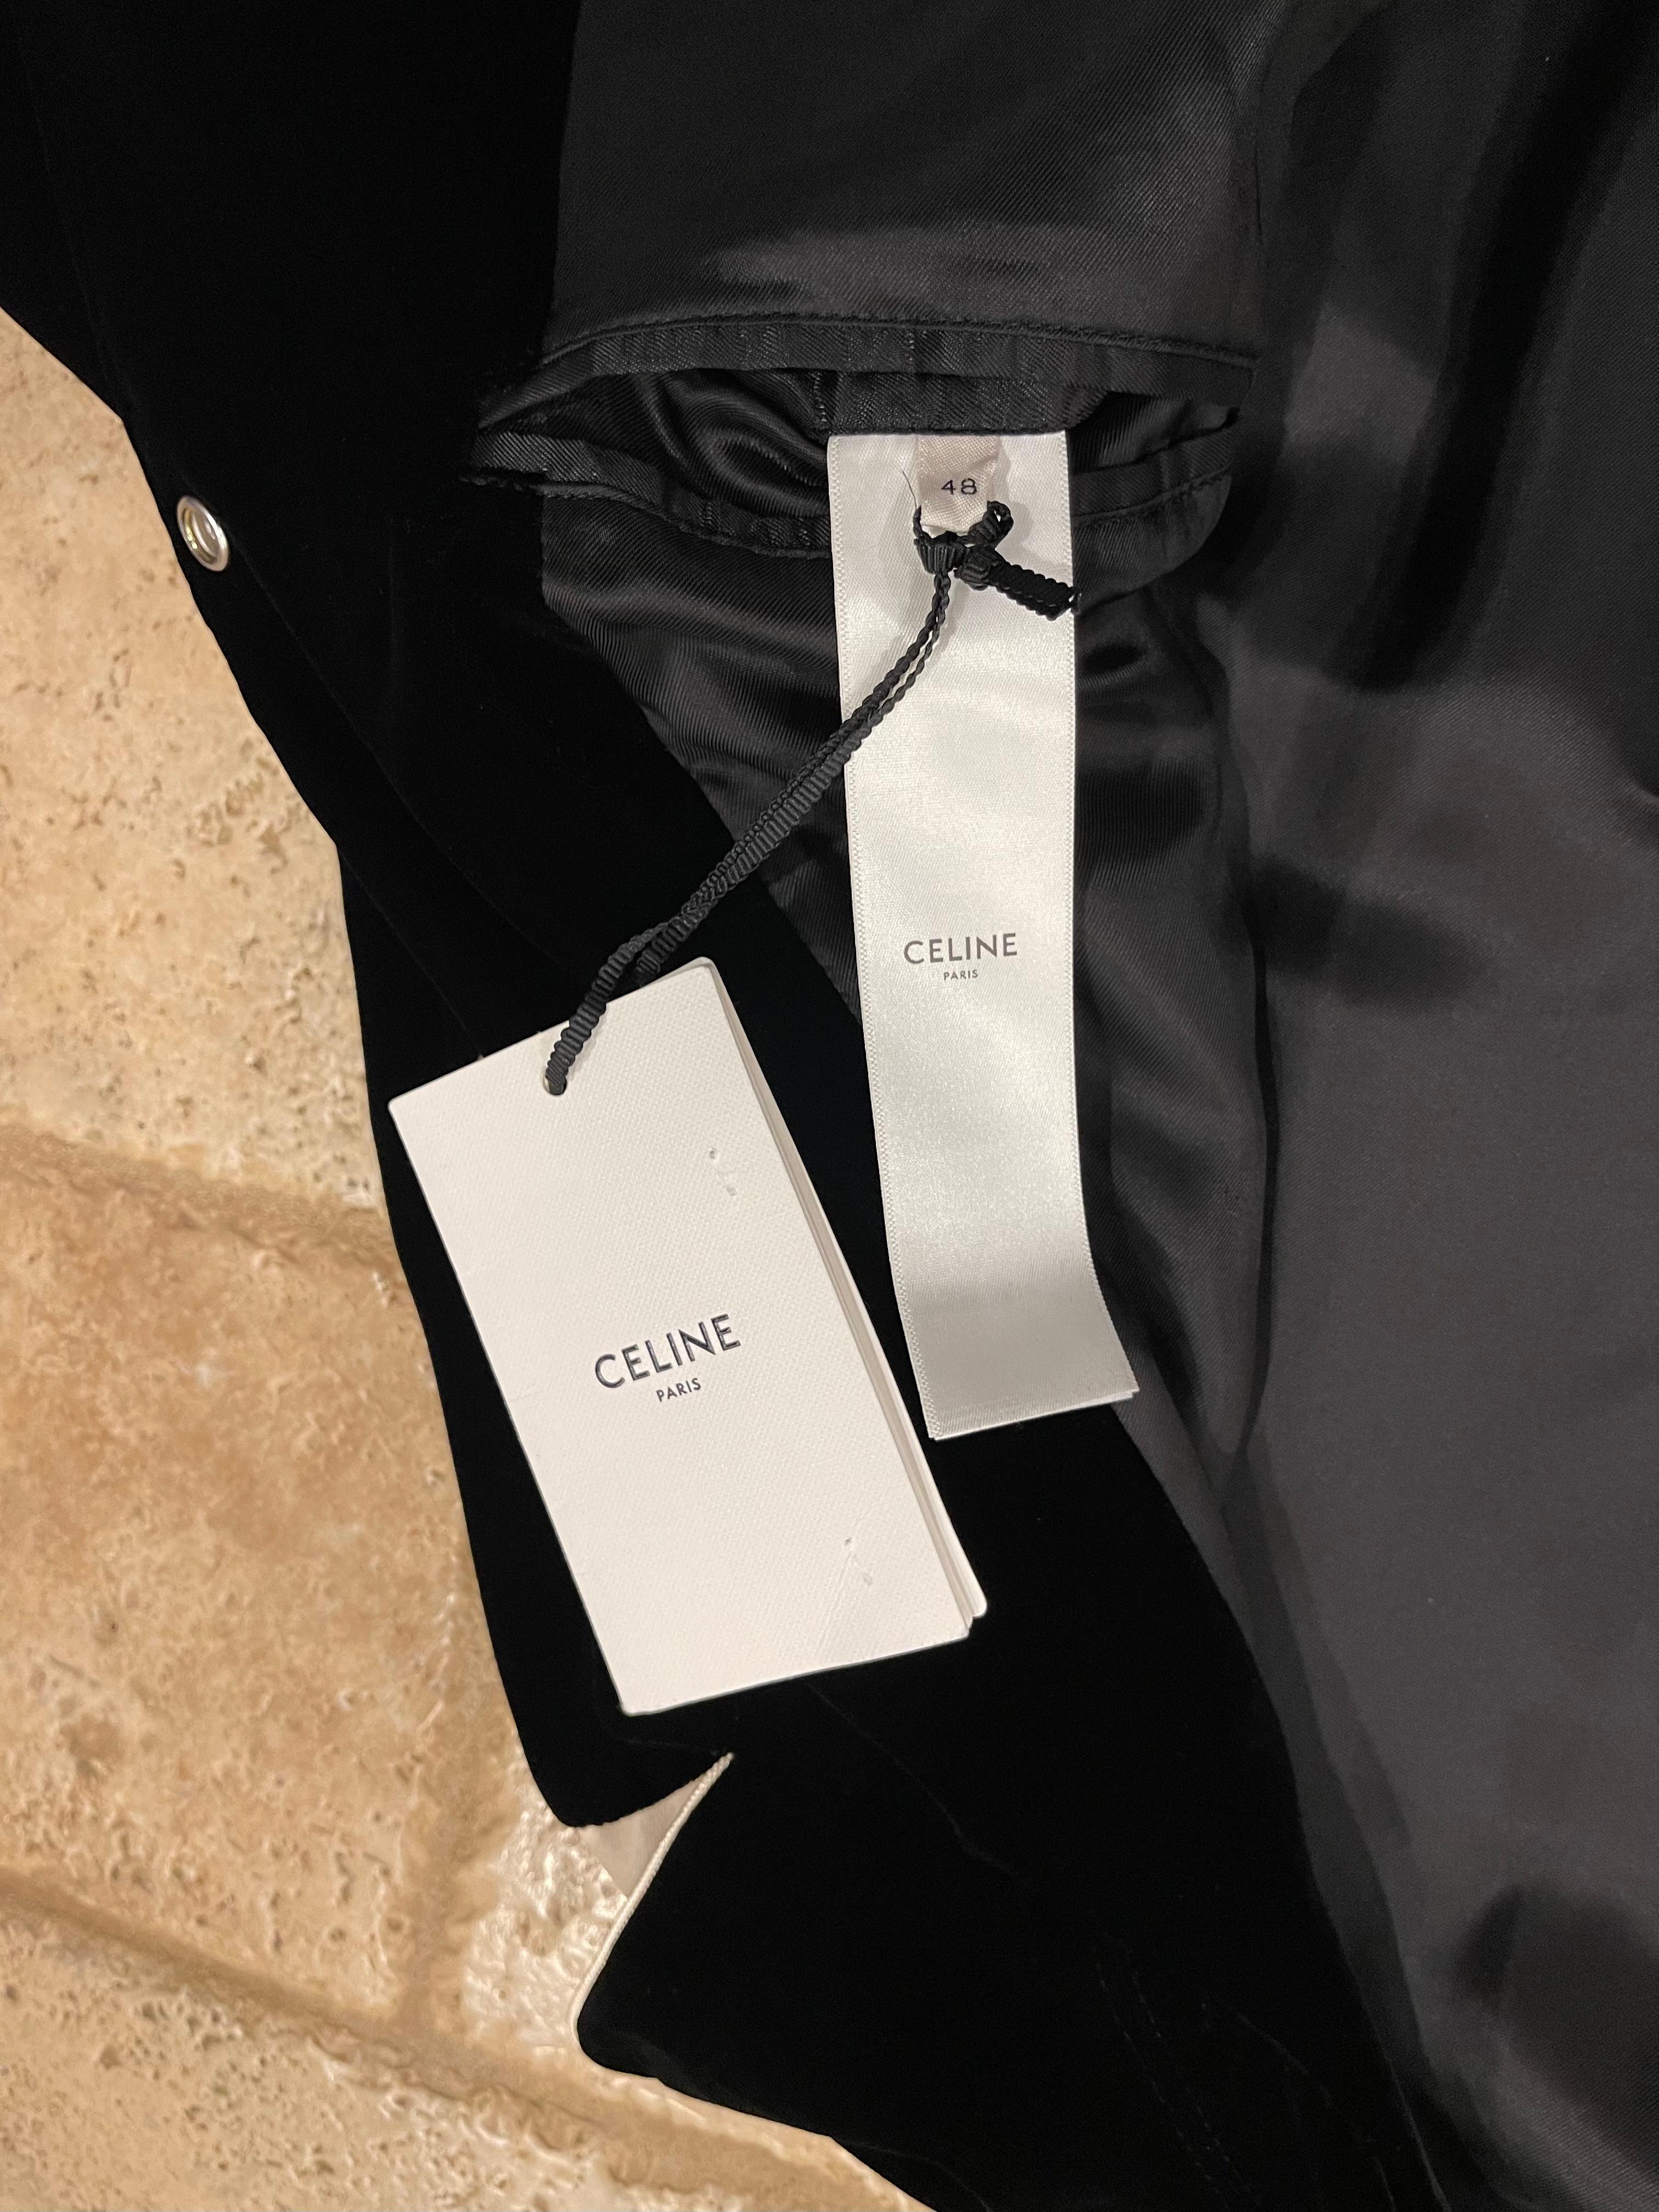 Celine Hedi Slimane Black Velvet Teddy Varsity Jacket RARE size 48 9